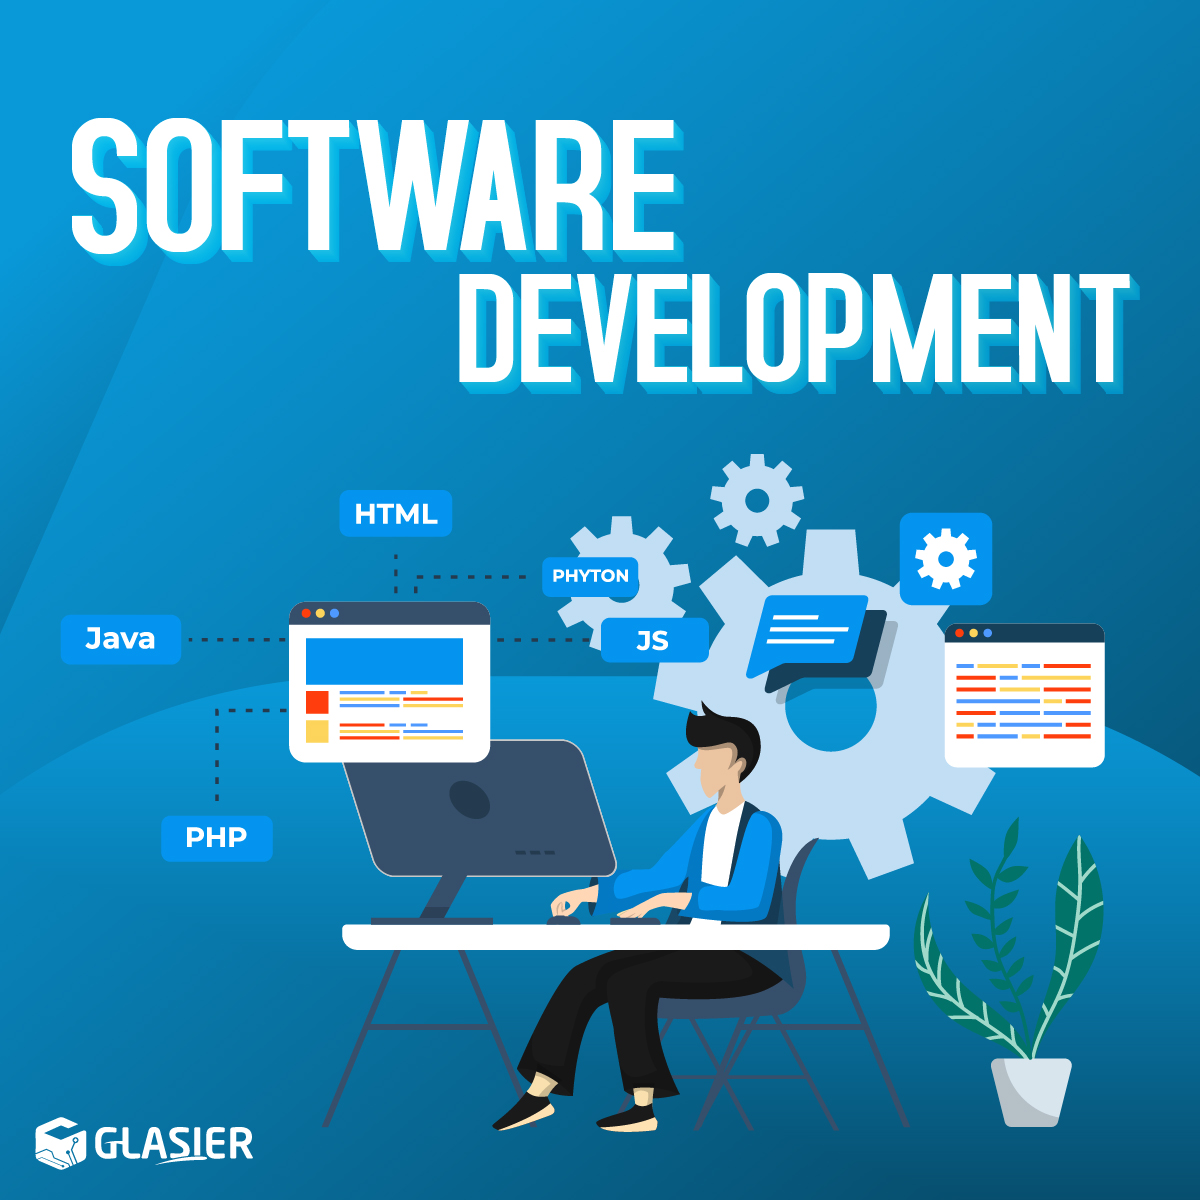 Software Development Company